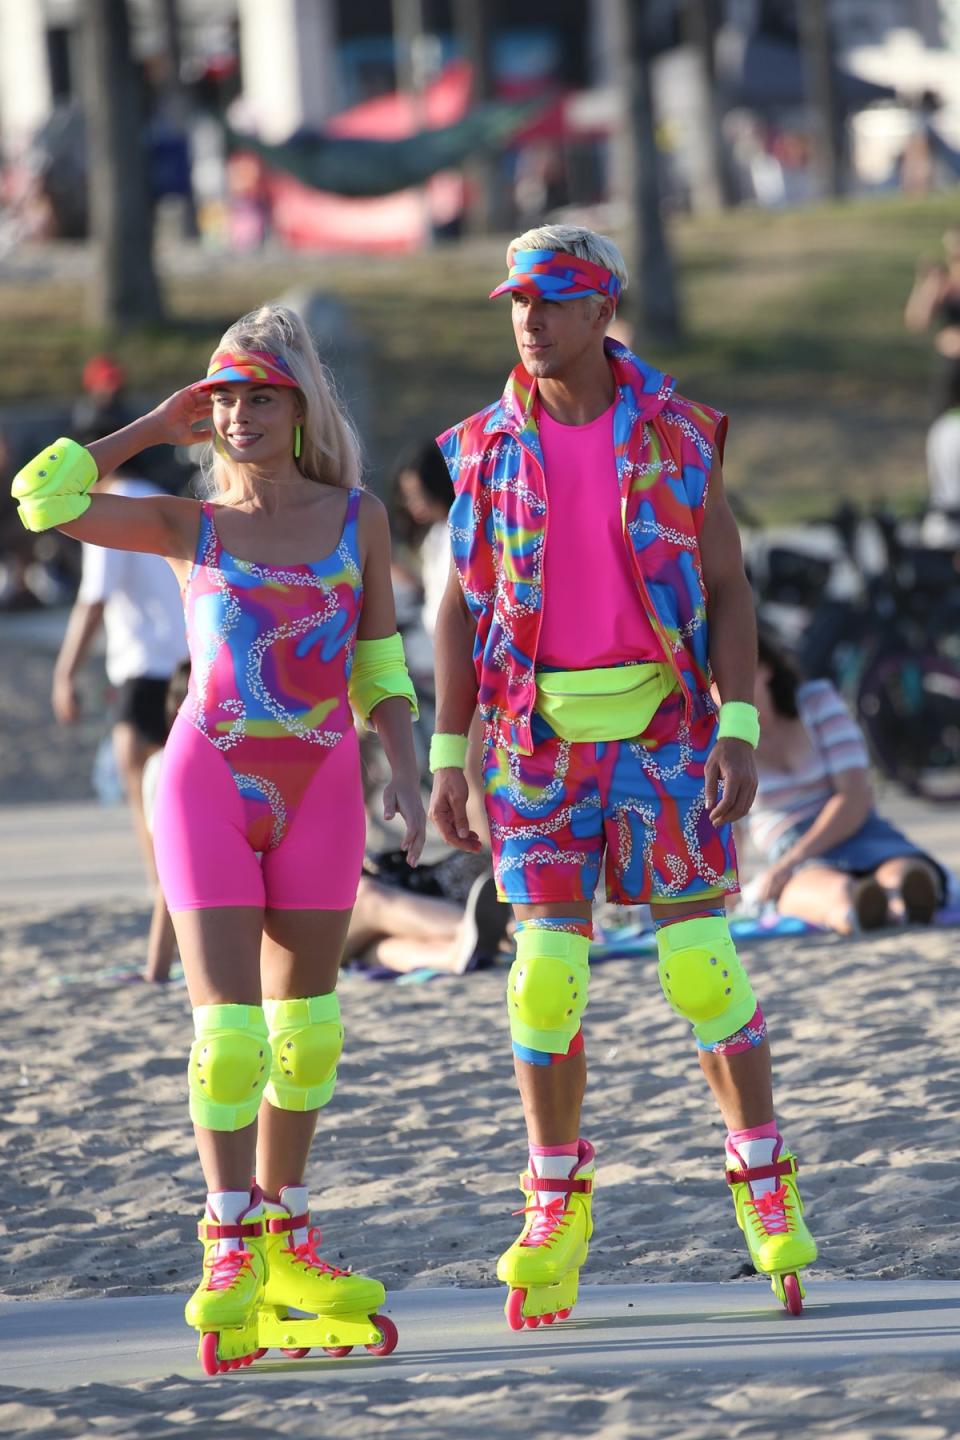 The pair were filming on a concourse near the Venice Beach skatepark (SplashNews.com)